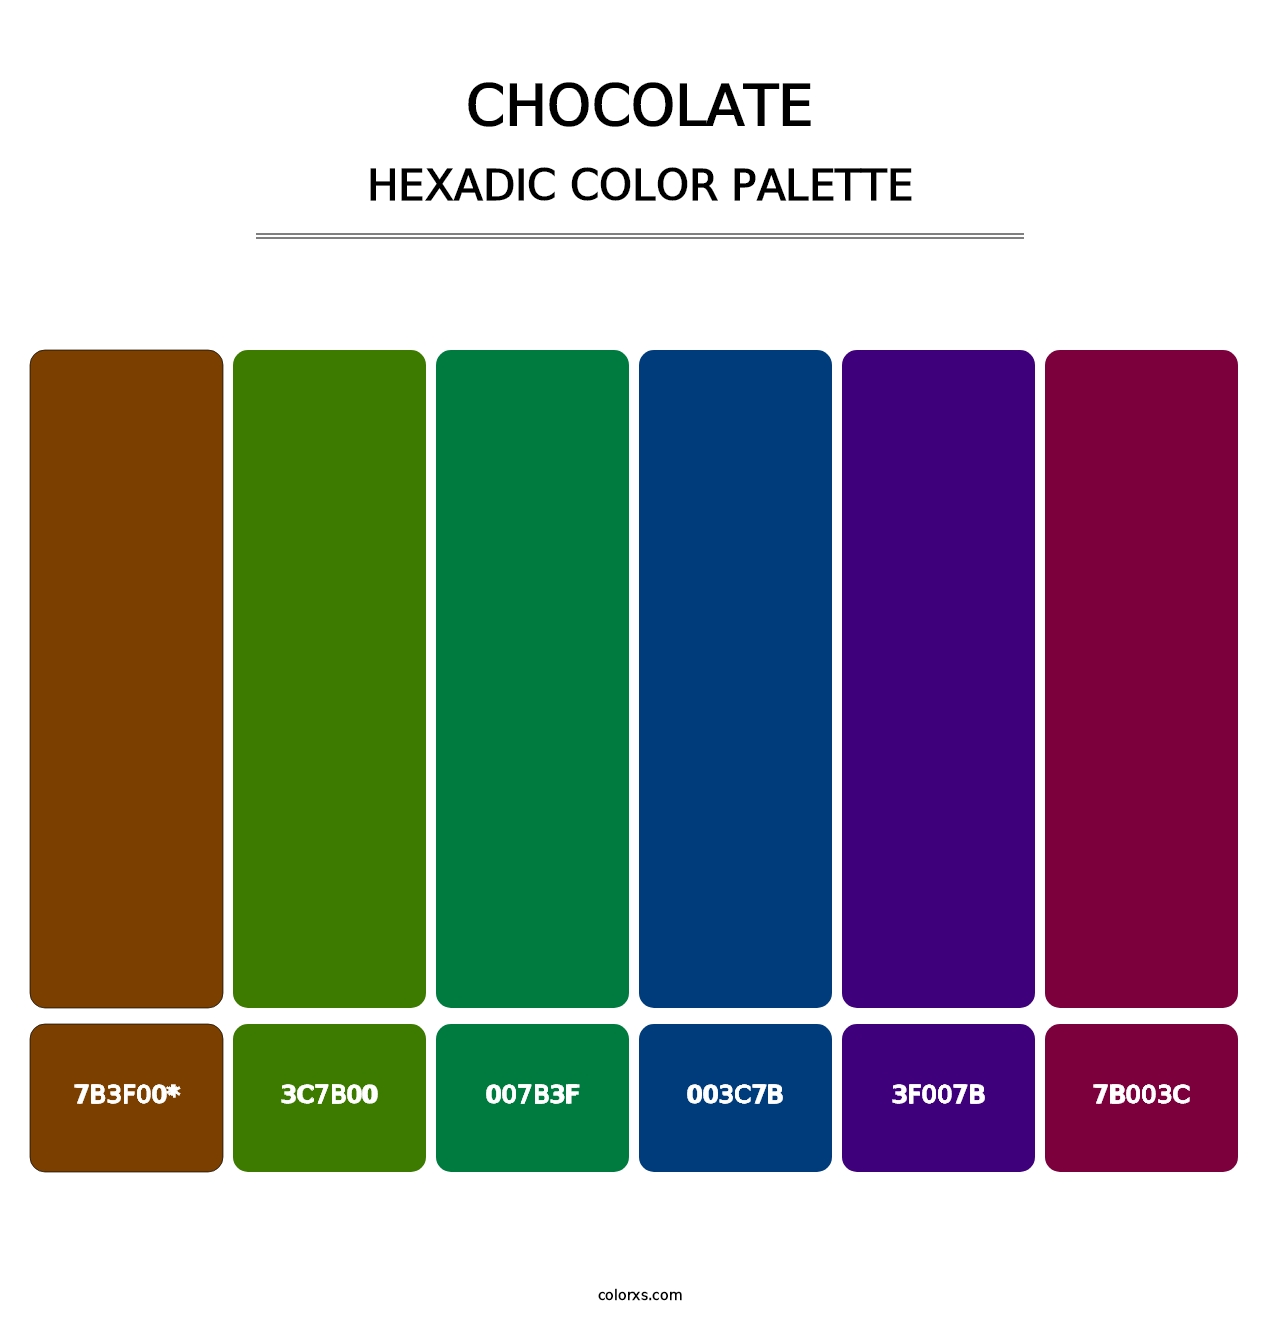 Chocolate - Hexadic Color Palette